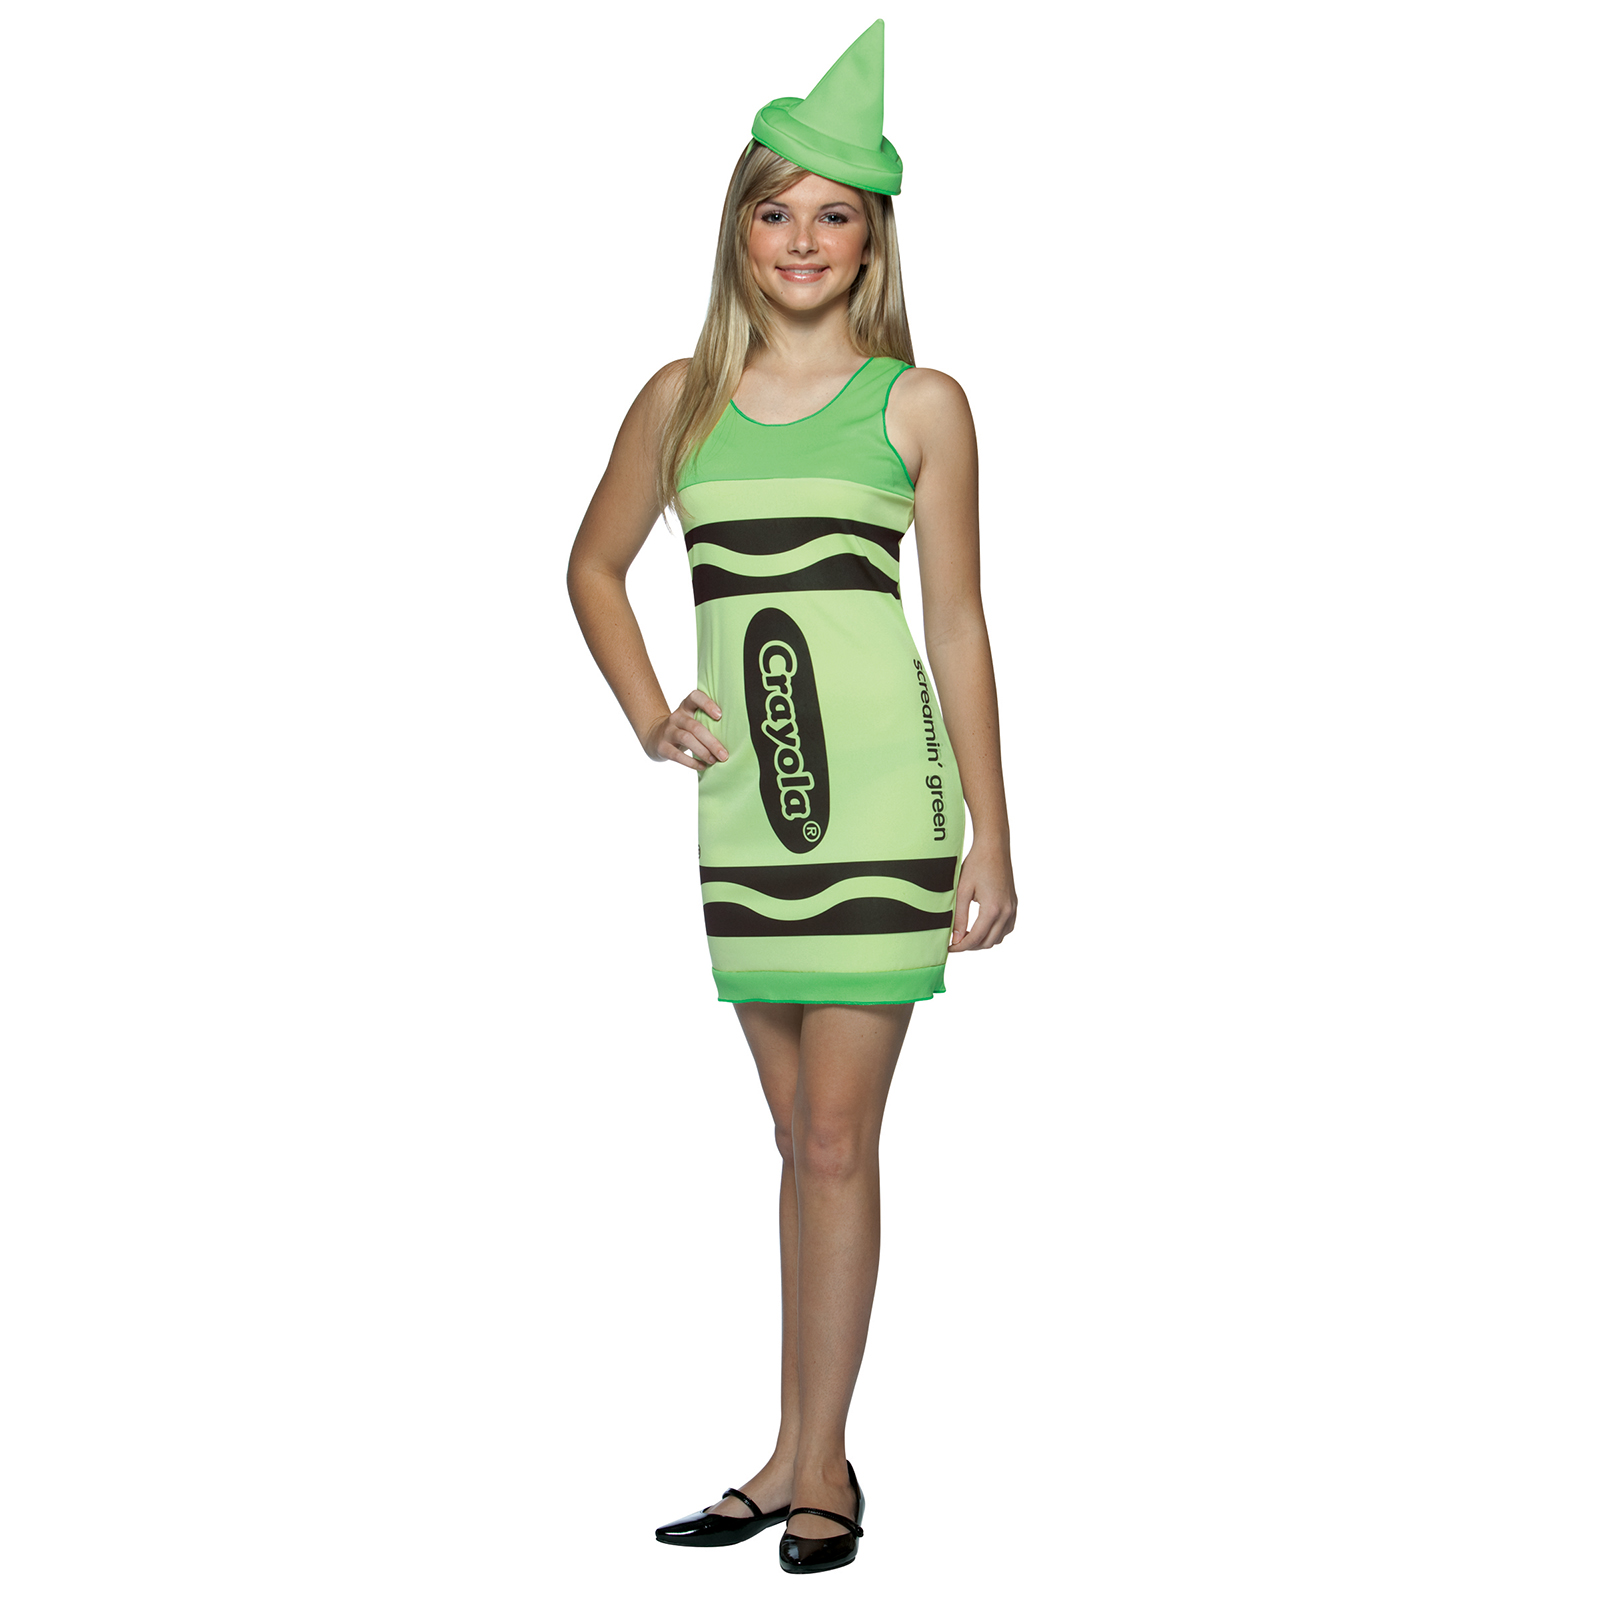 Crayola ScrGreen TnkDress Teen Size: One Size Fits Most